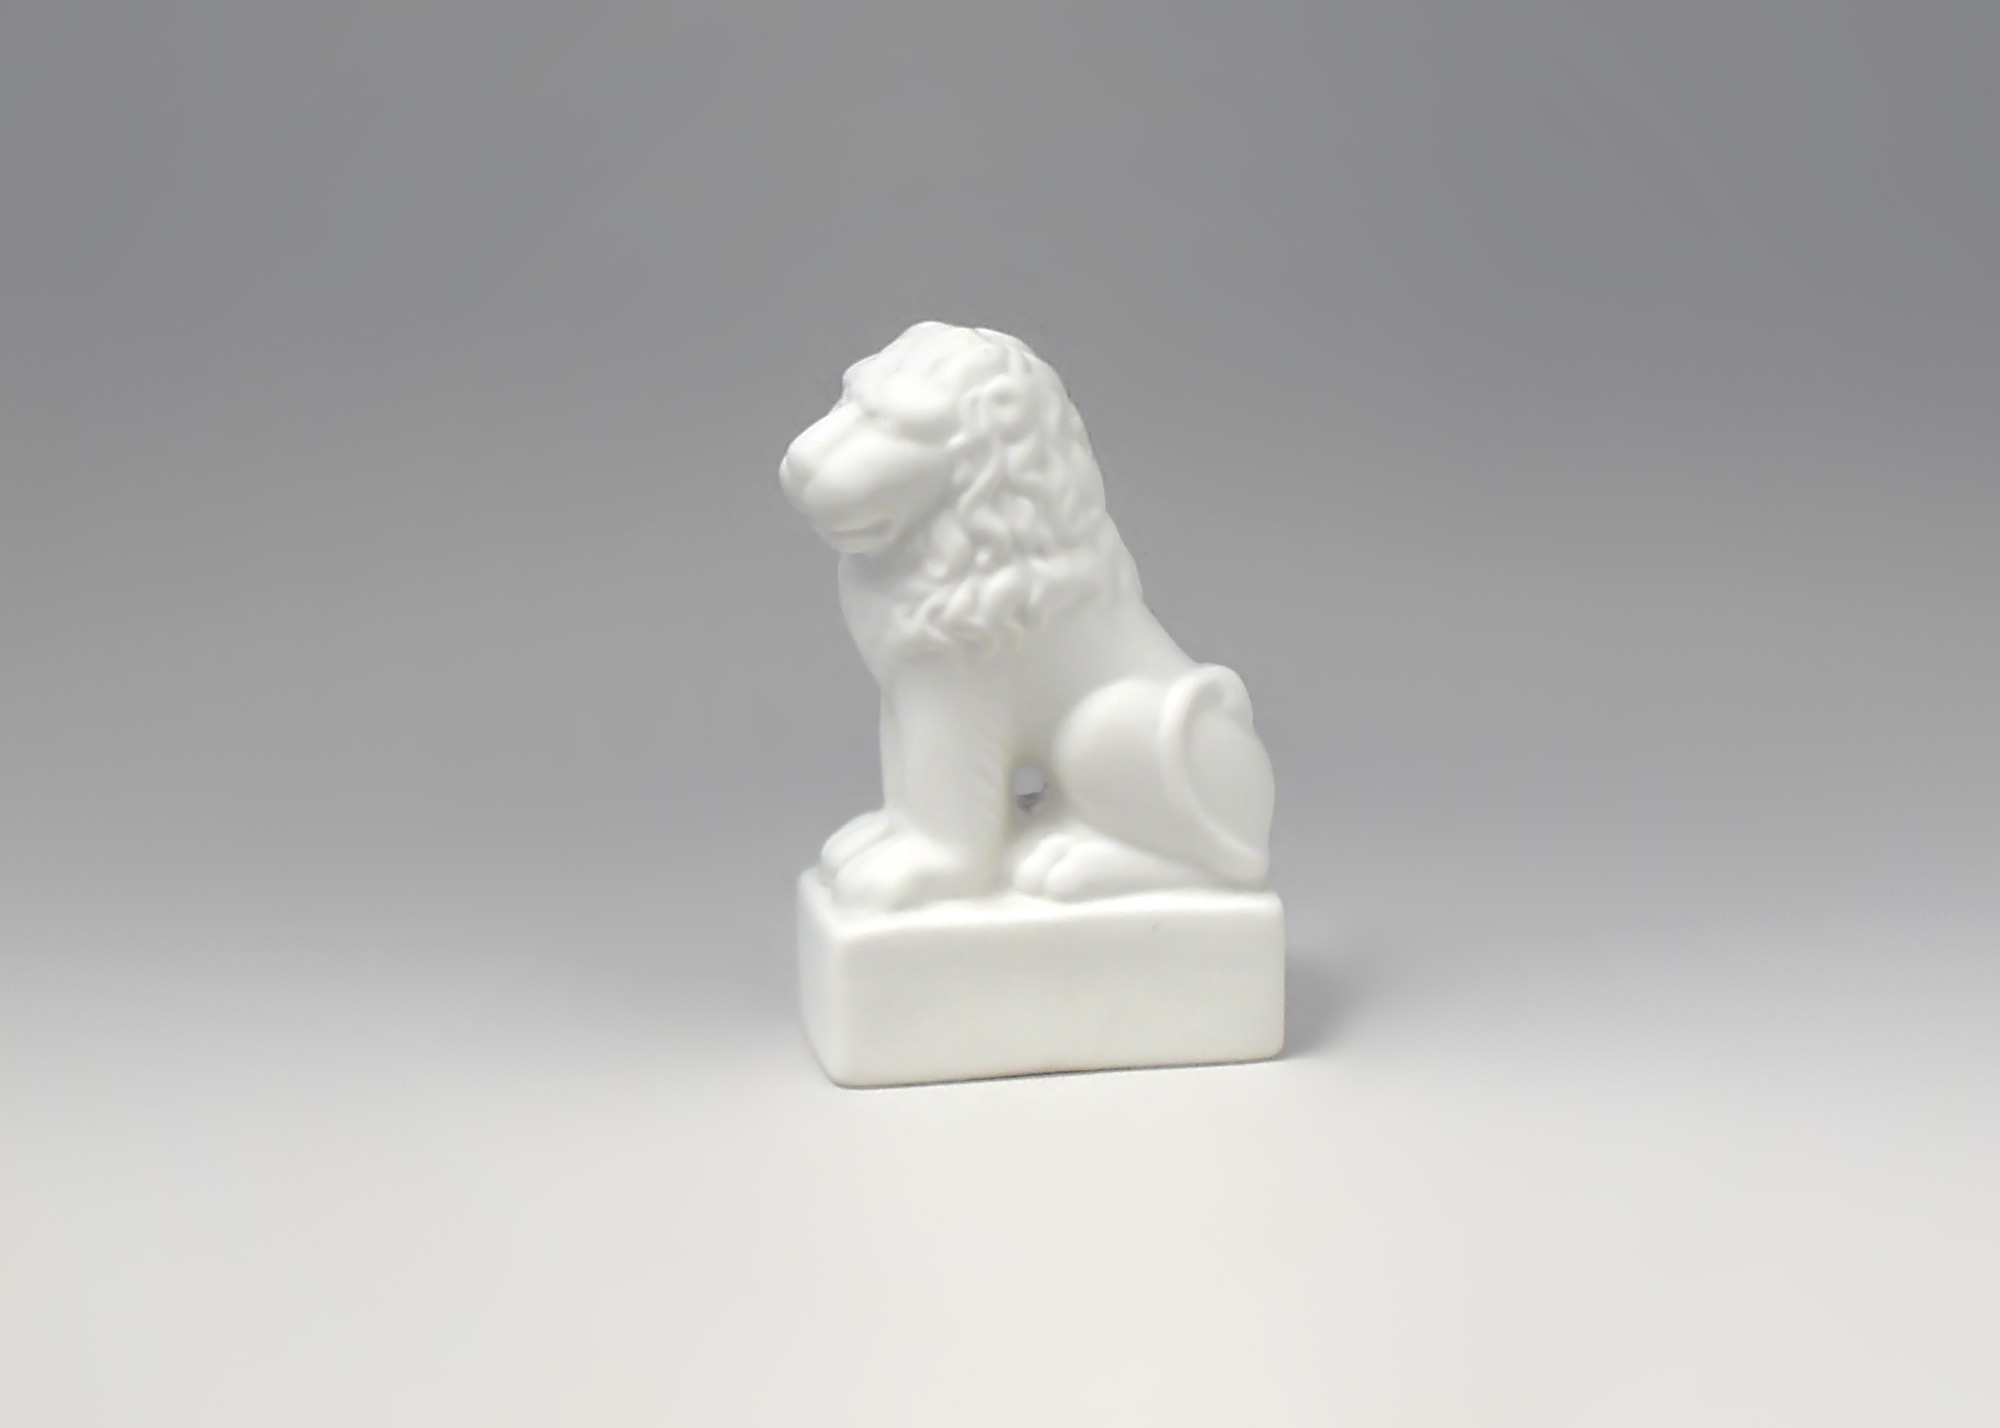 Buy Miniature Lion Statue at GoldenCockerel.com